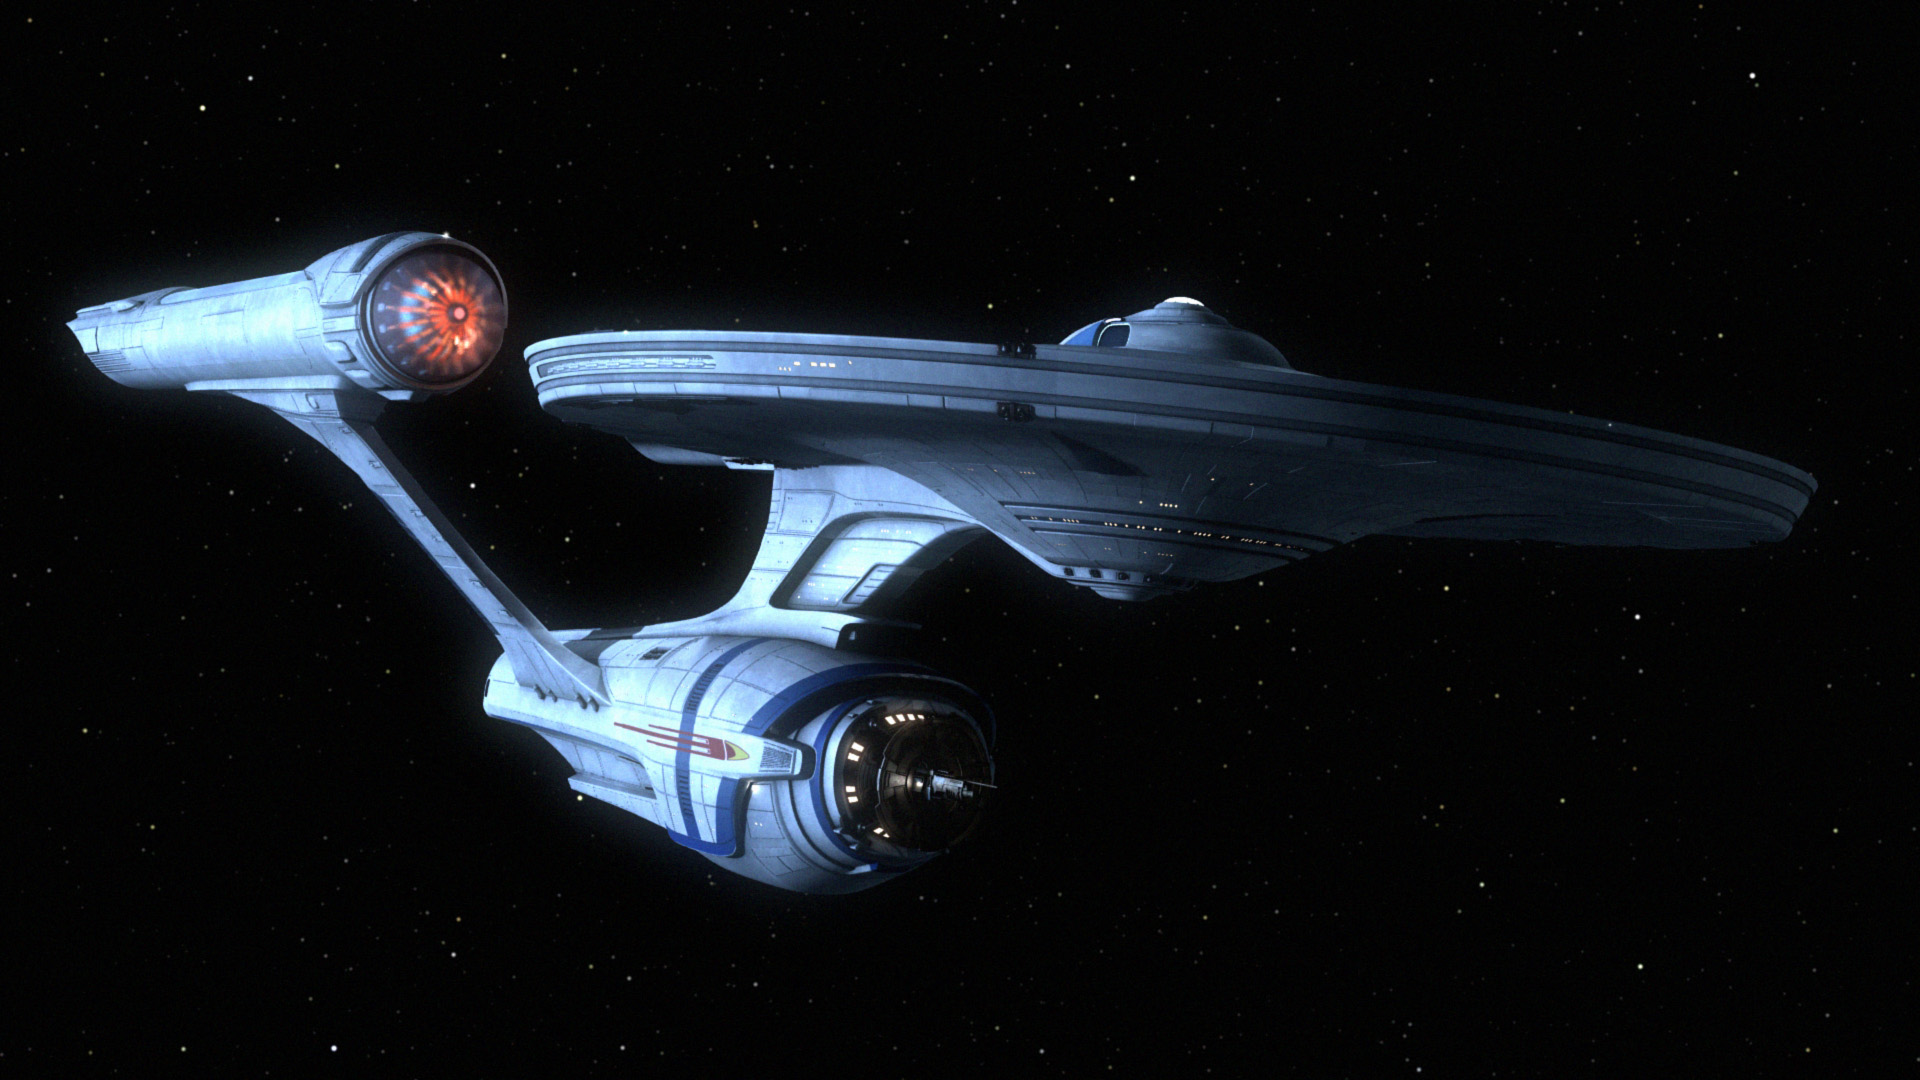 Star Trek, spaceships, USS Enterprise - desktop wallpaper